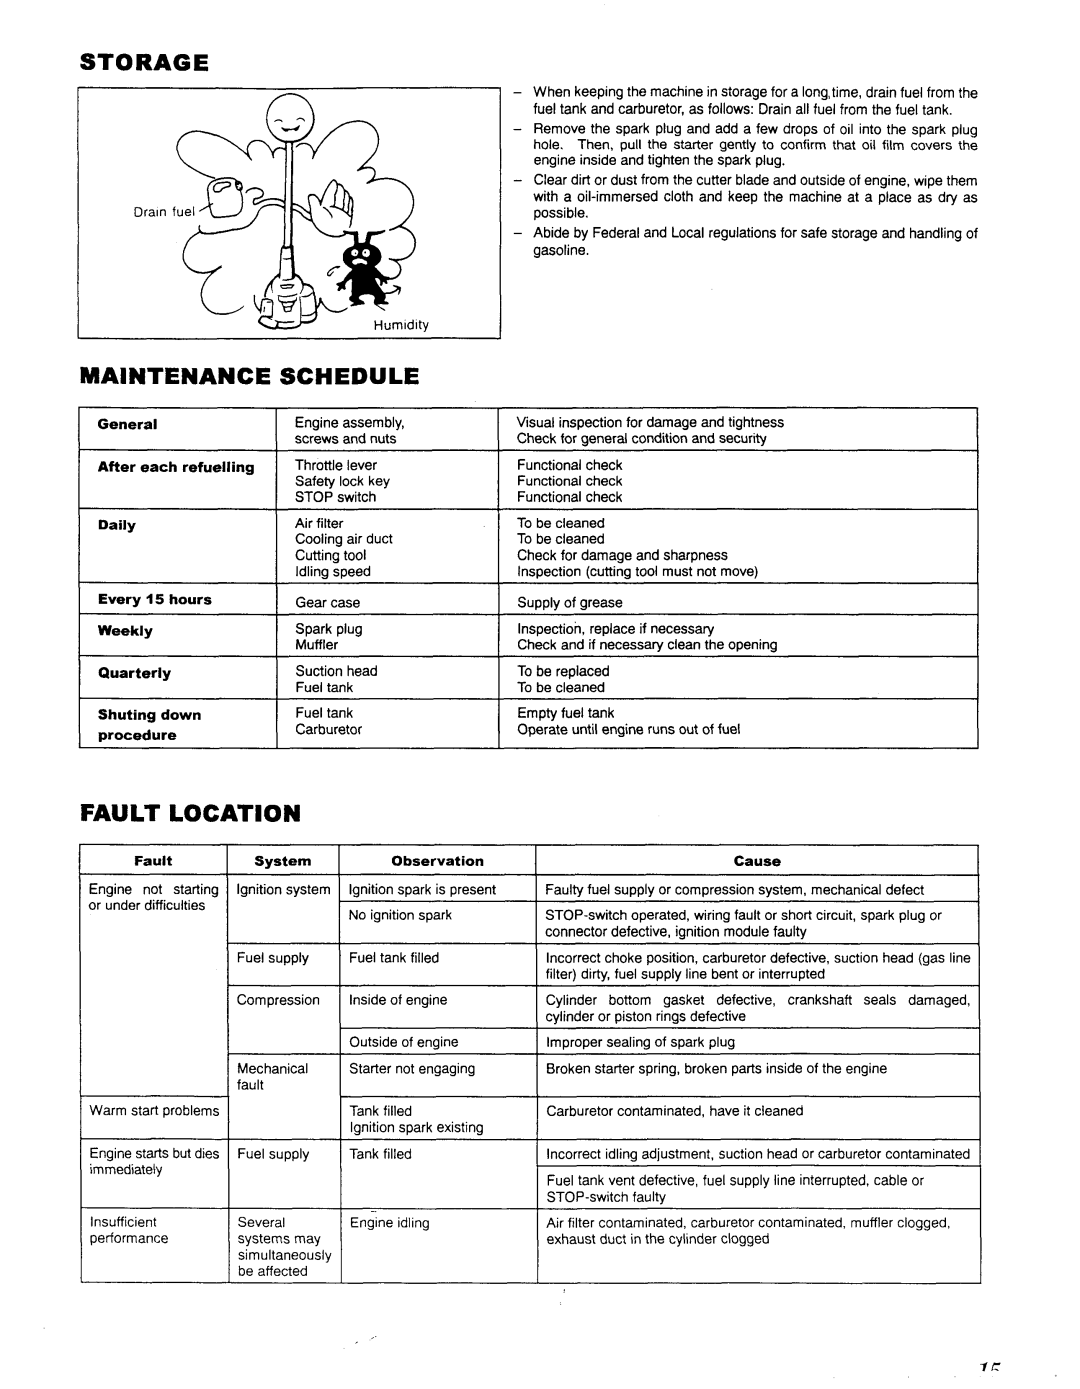 Makita EH 620, EH 450 manual Storage, Maintenance, Schedule, Fault Location 